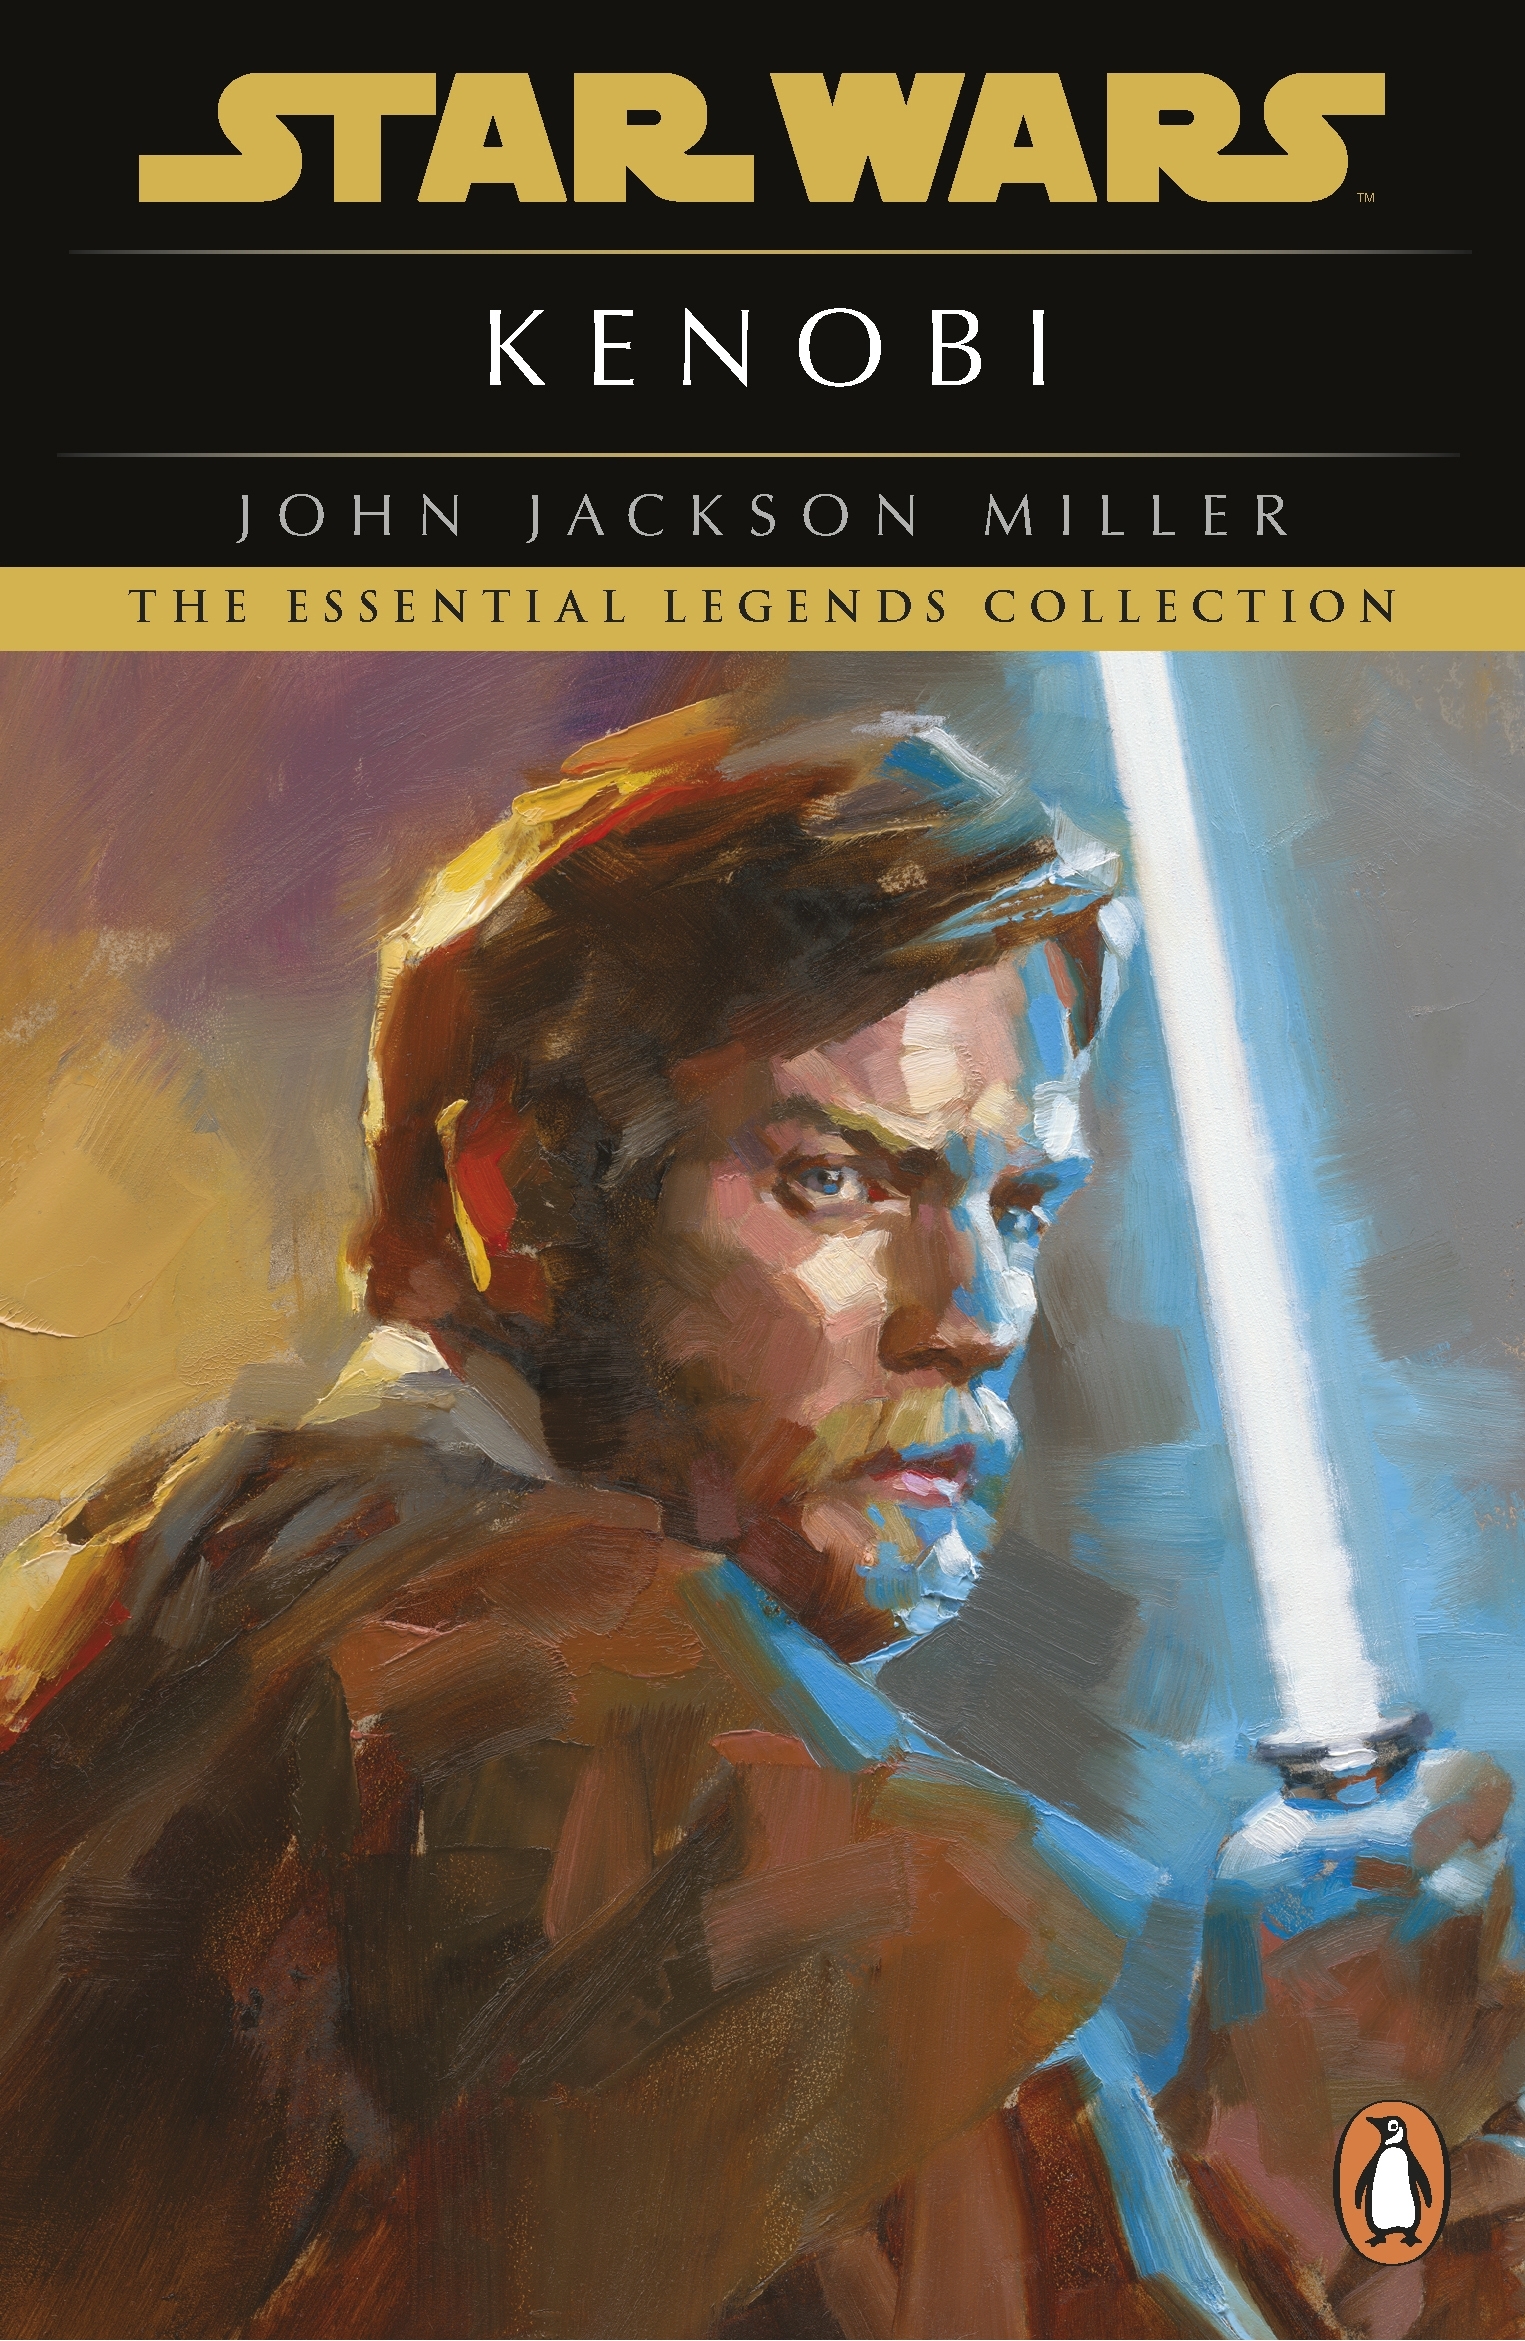 Star Wars by John Jackson Miller